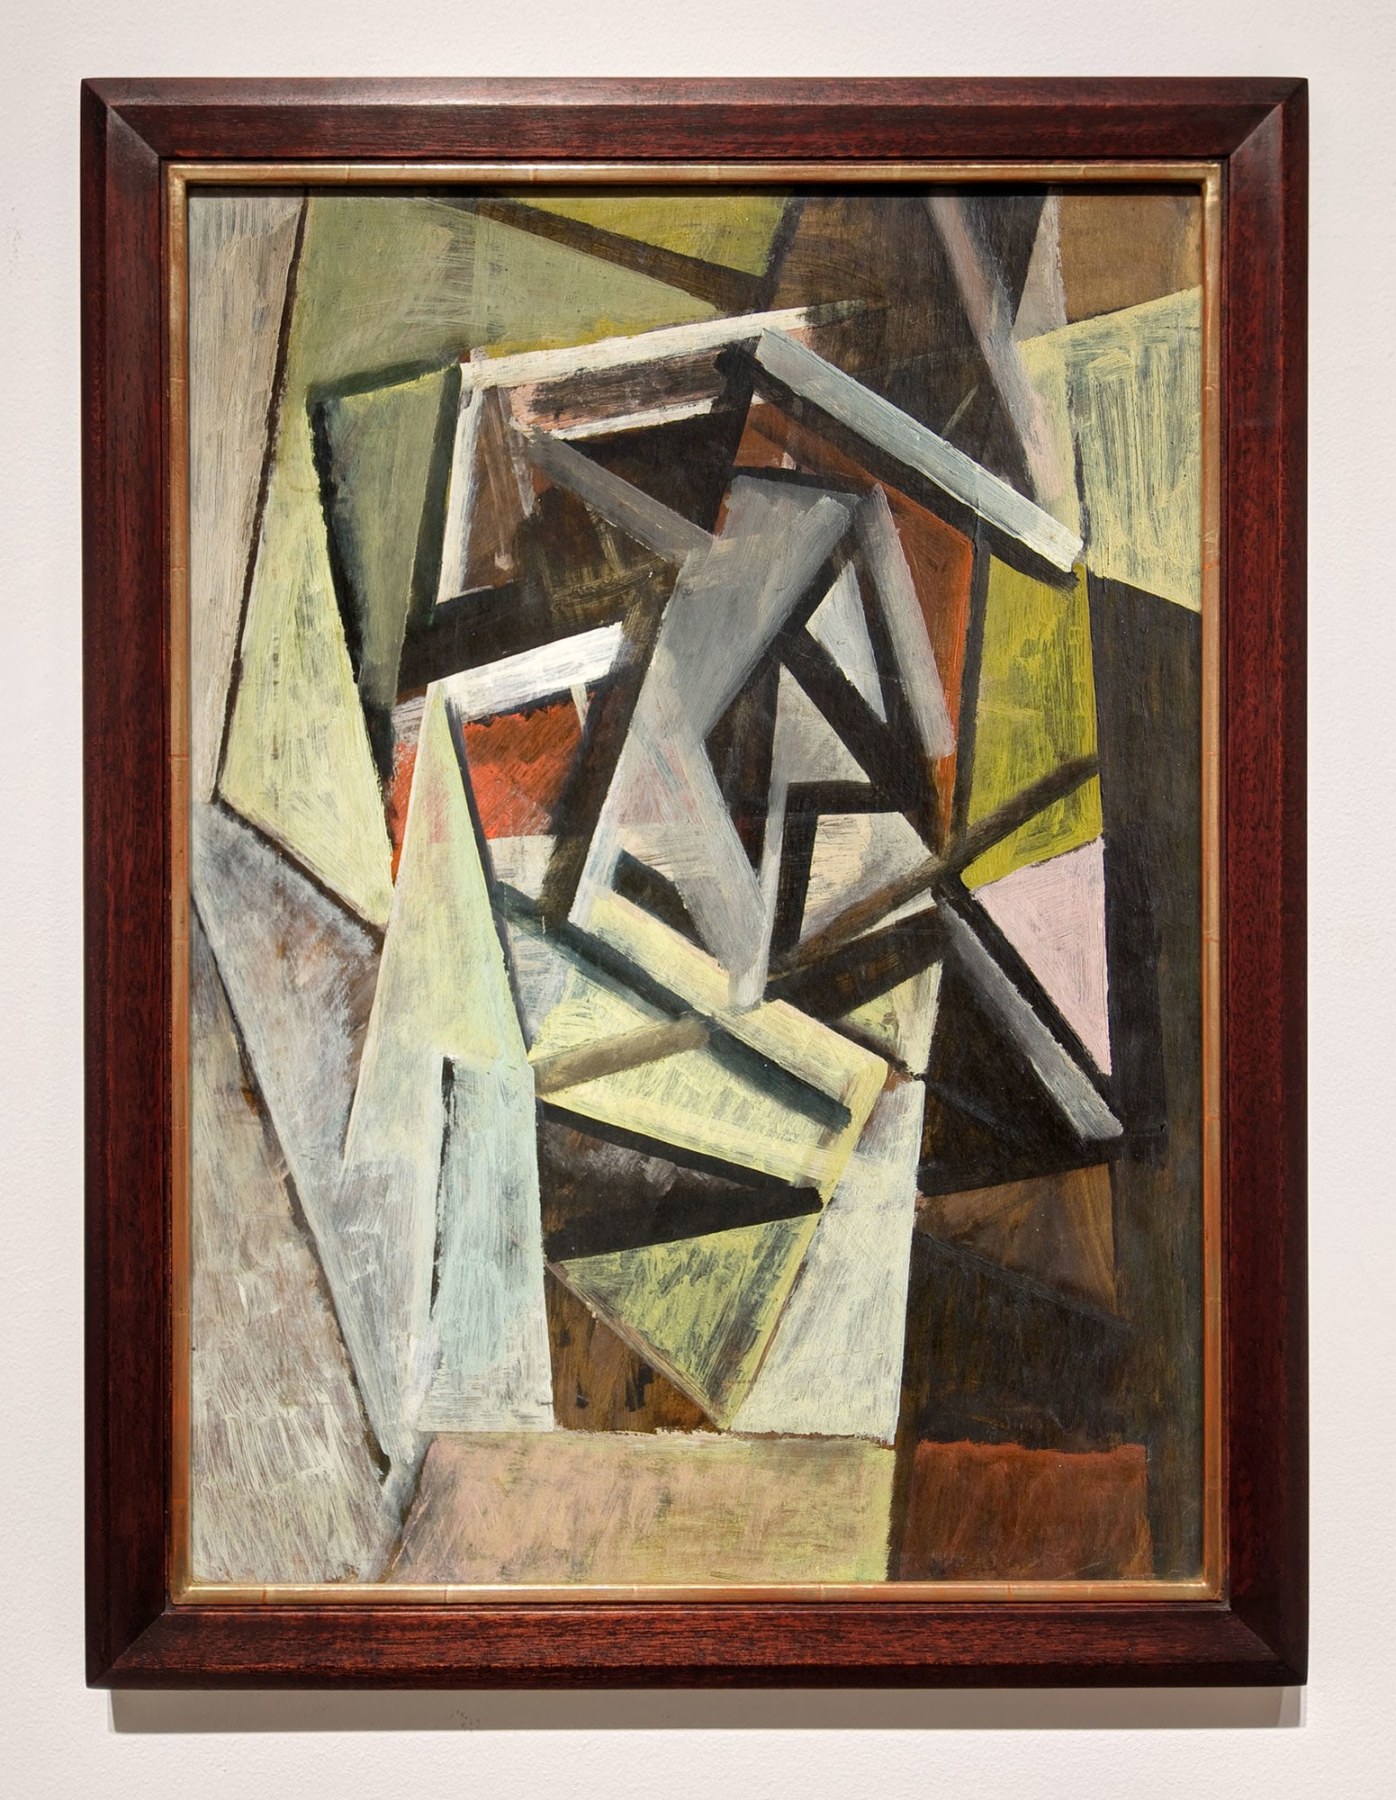 SIDNEY GORDIN (1918-1996), Untitled, c. 1940